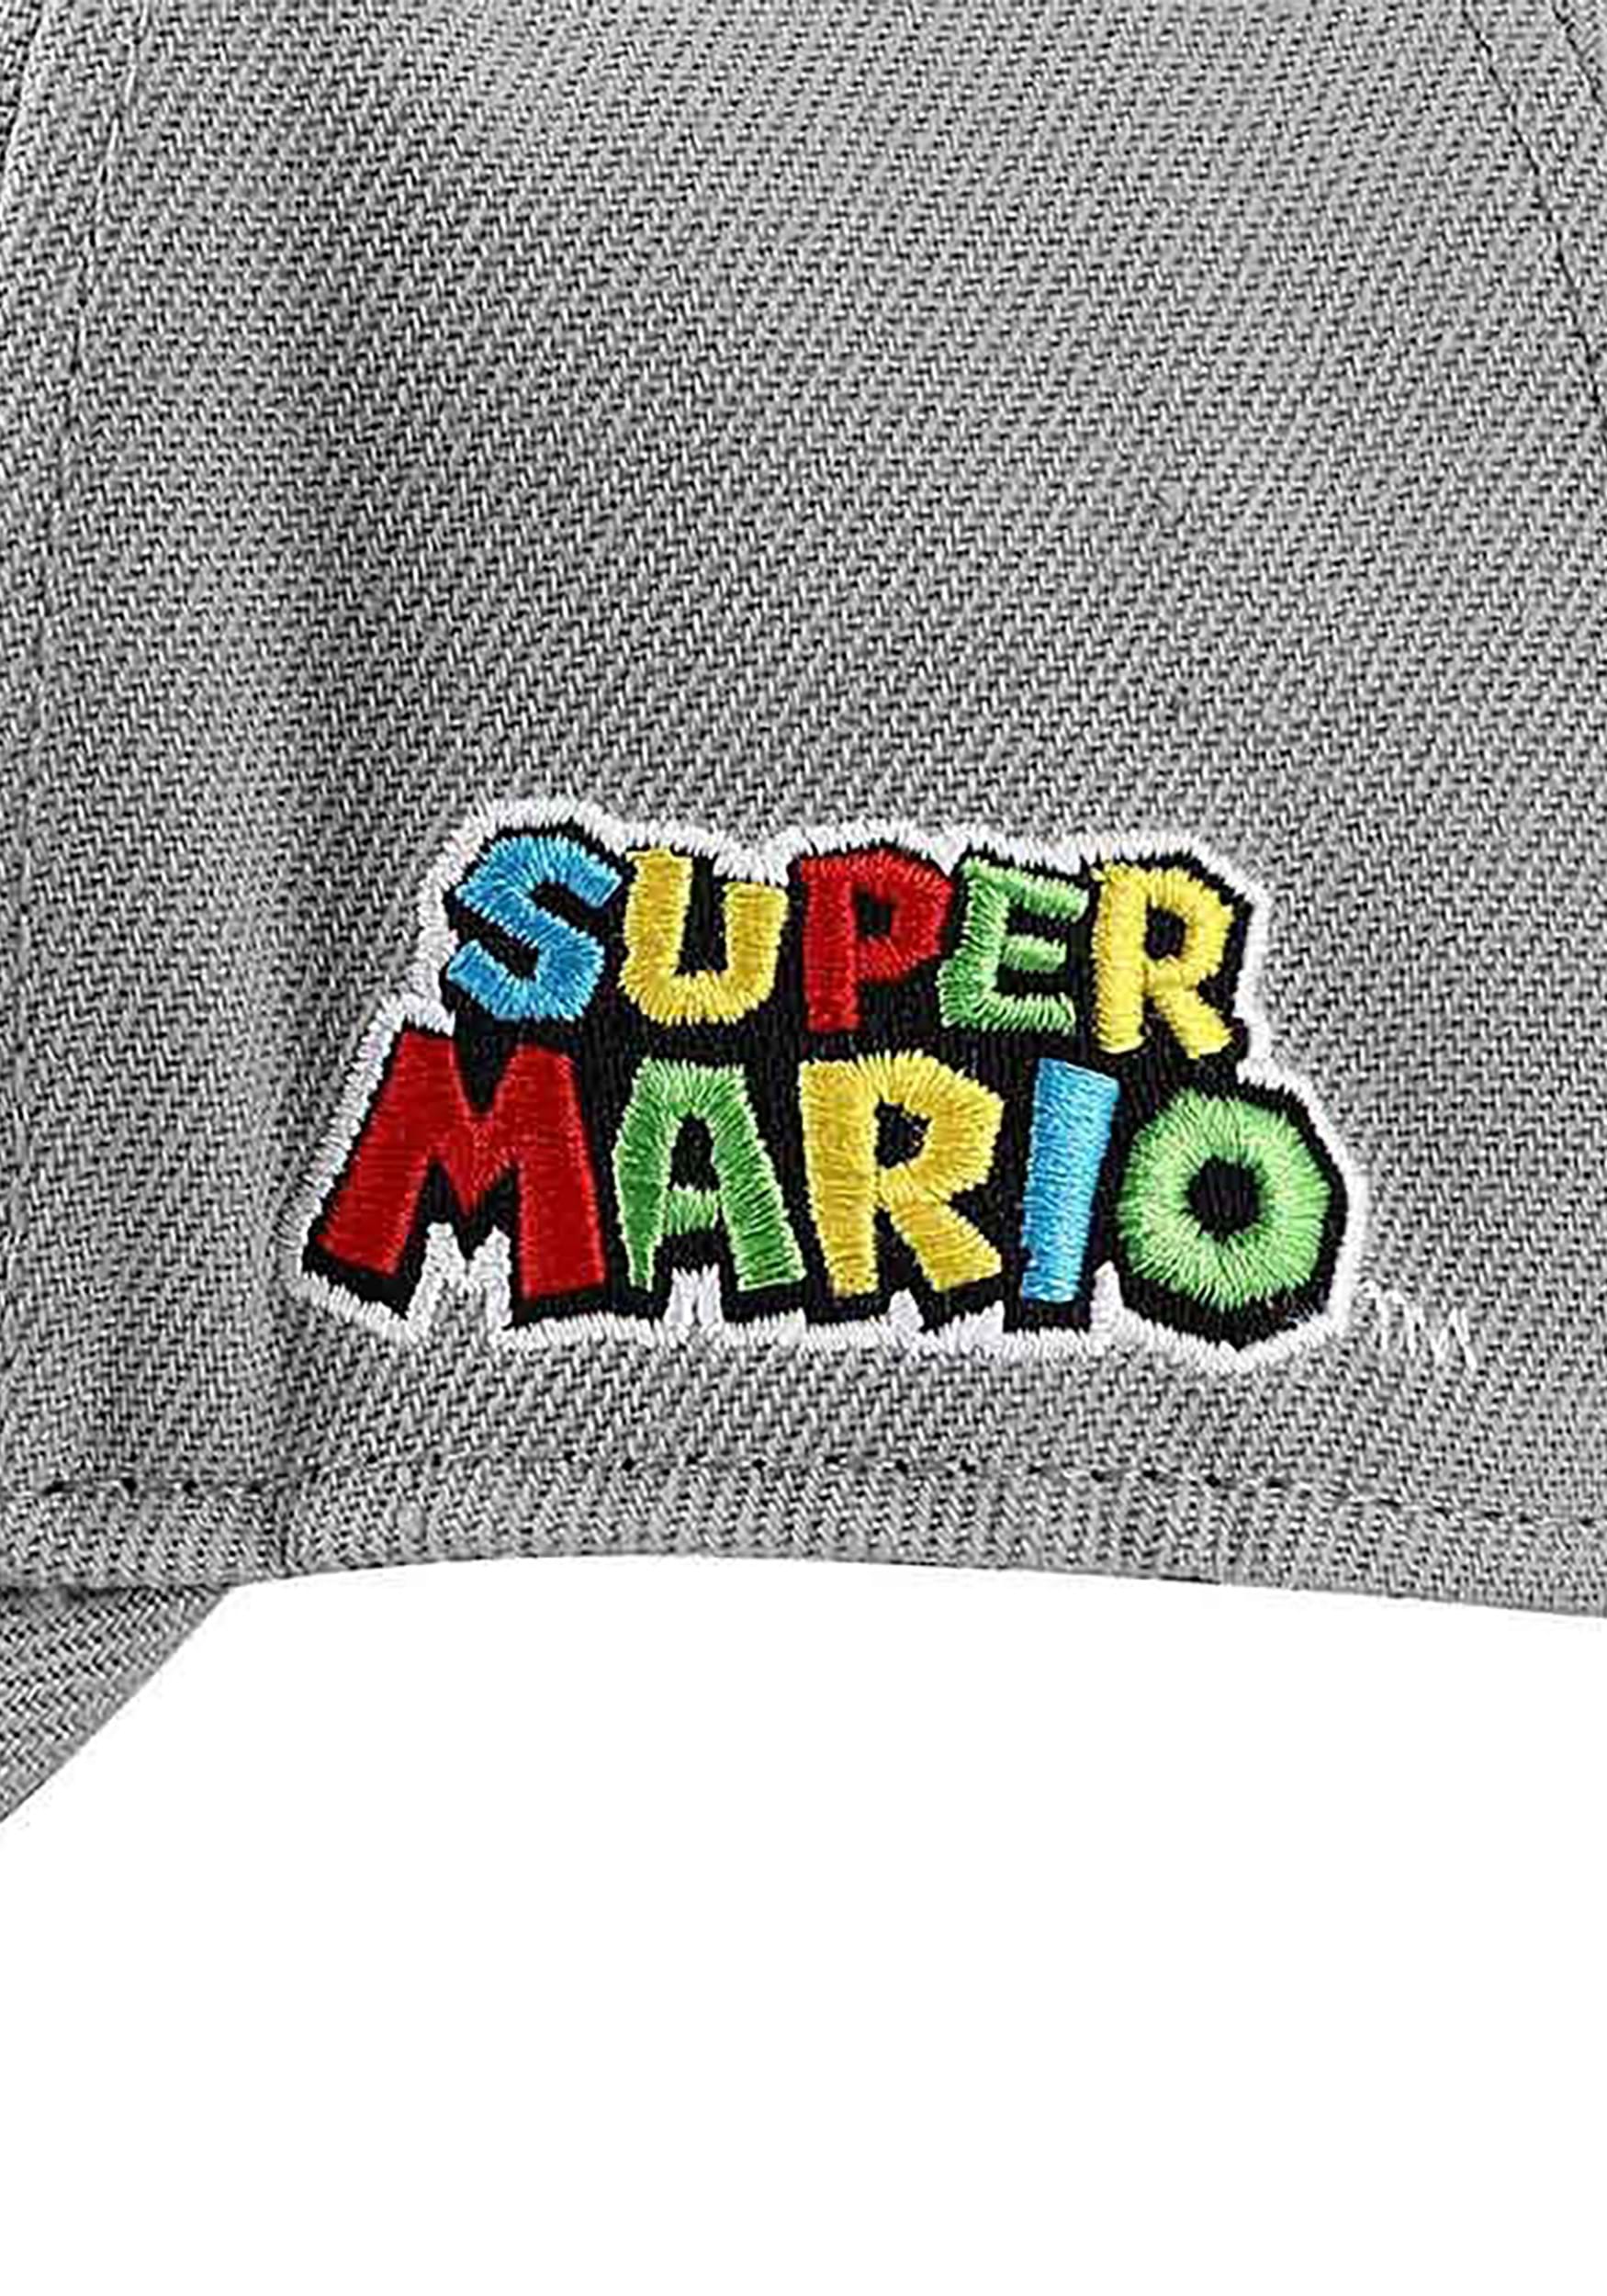 Nintendo Super Mario Game M Iron on Patch